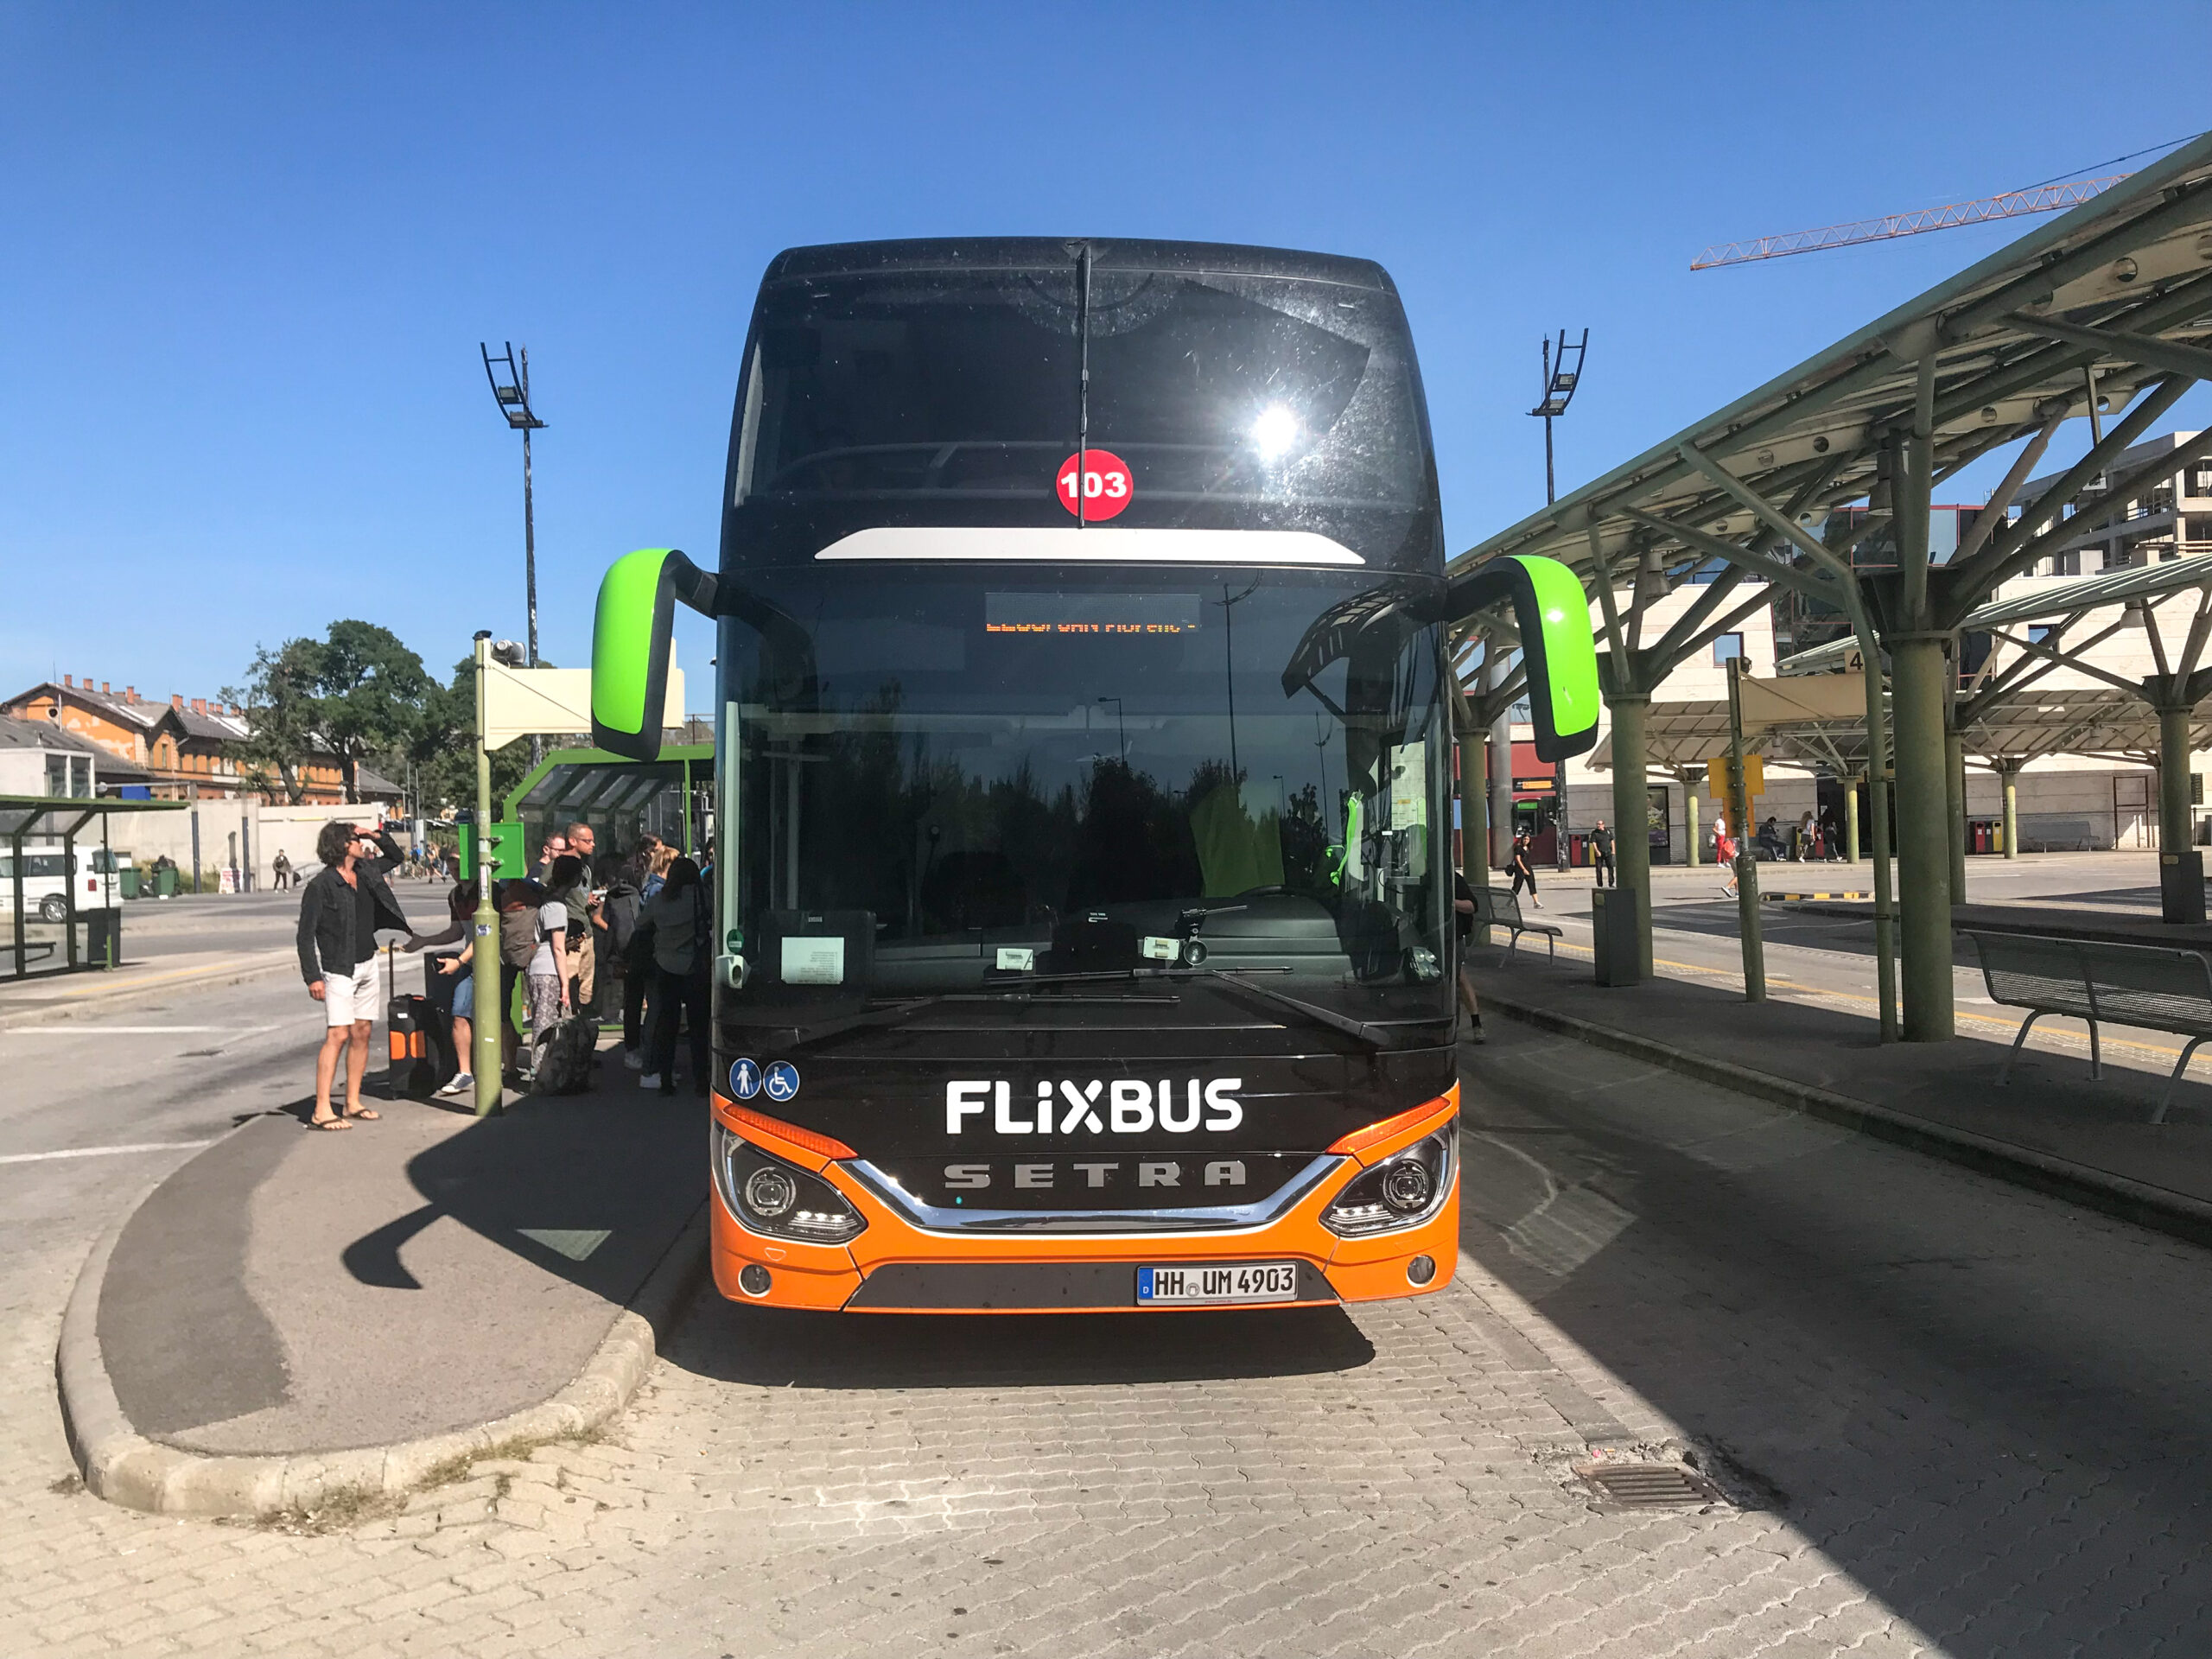 Flixbus at Kelenföld trainstation